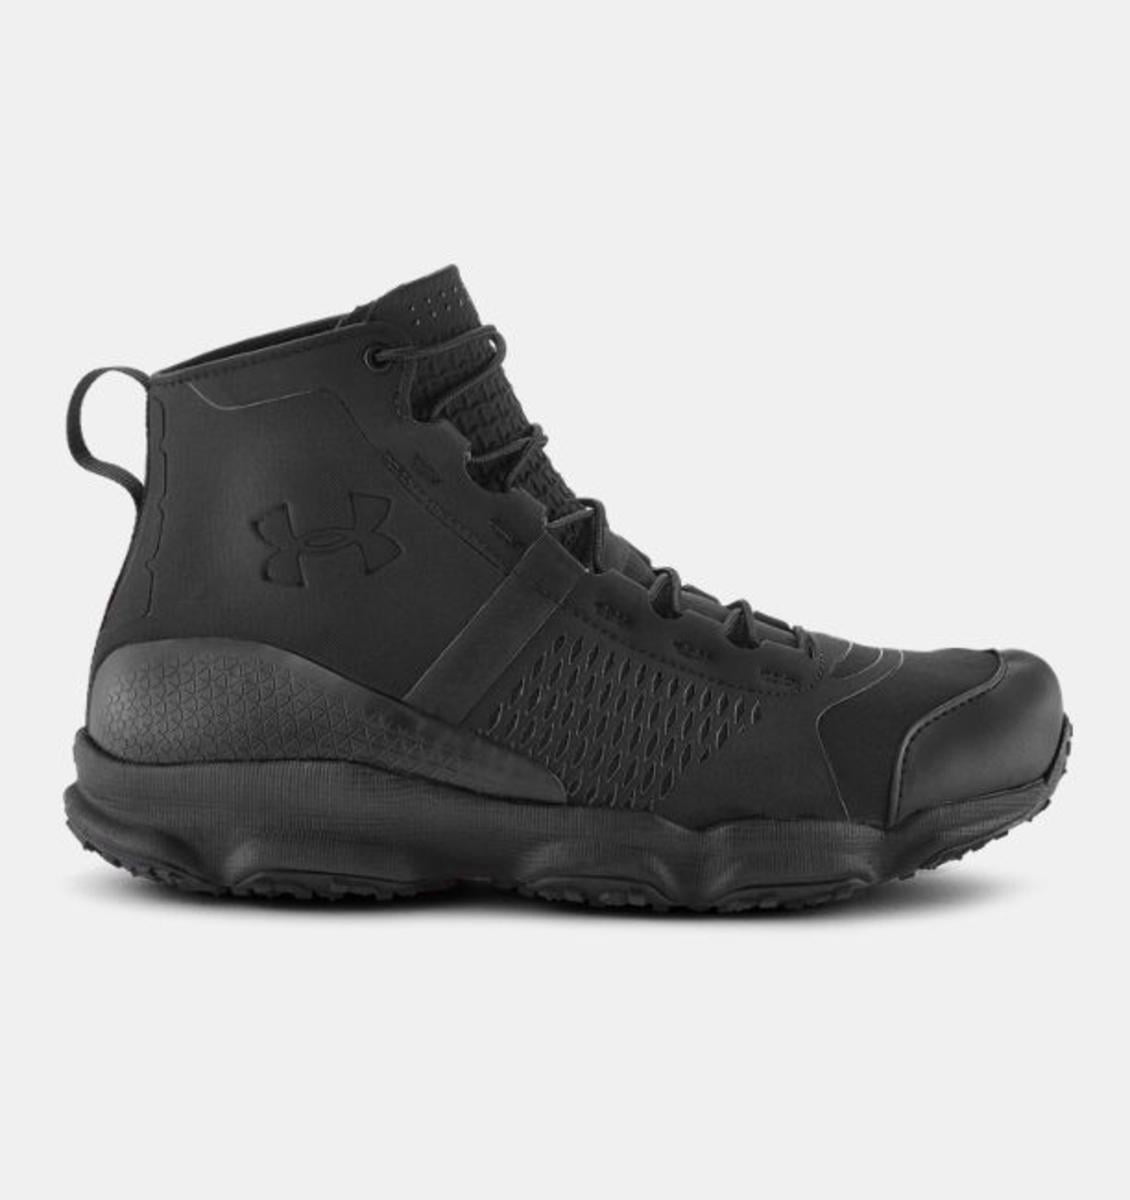 Under Armour Men's UA SpeedFit Hike Boots - Black/Black/Black 10.5